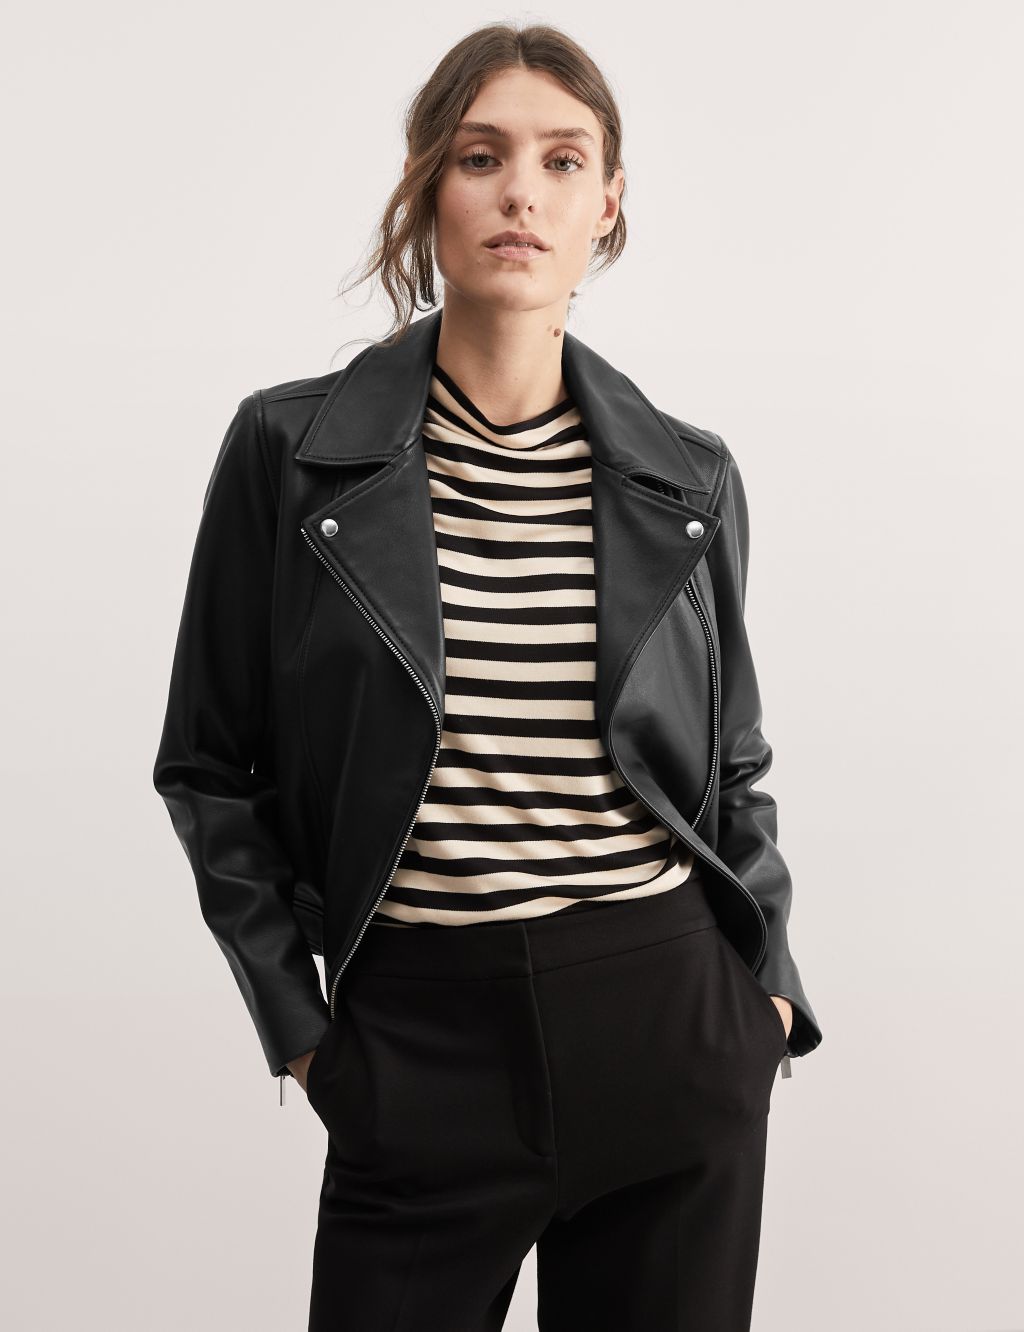 Urban Bliss Black Leather-Look Biker Jacket